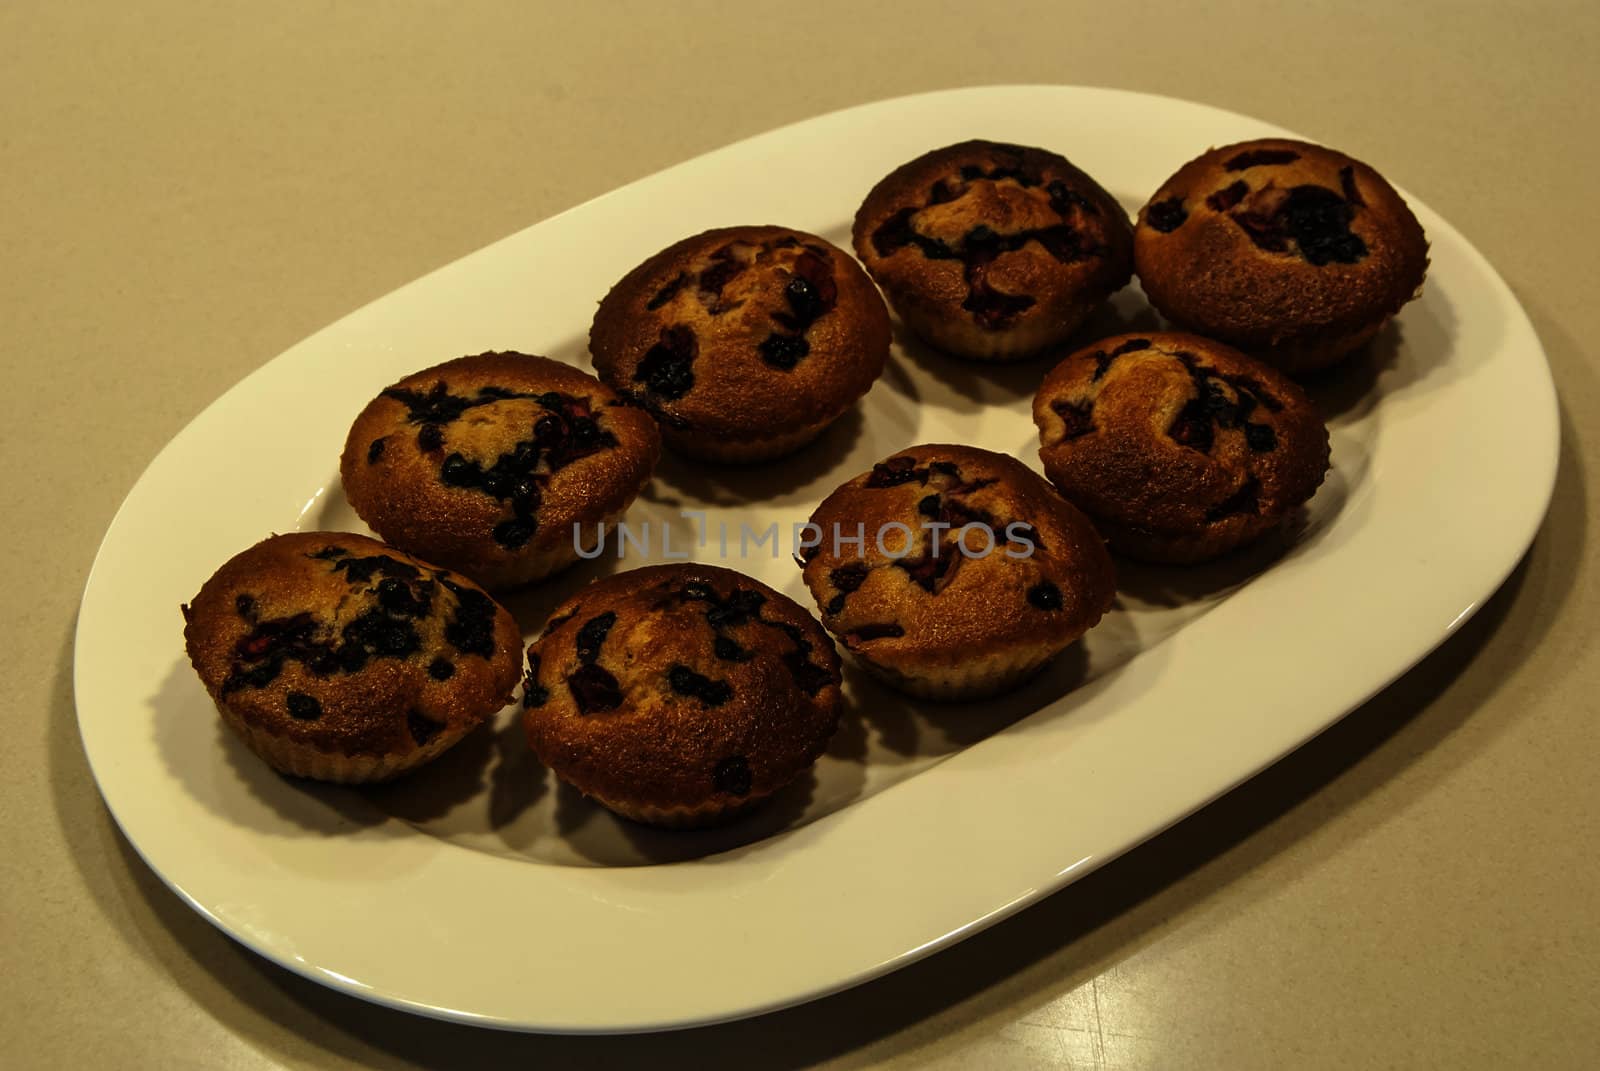 Homemade muffins by varbenov